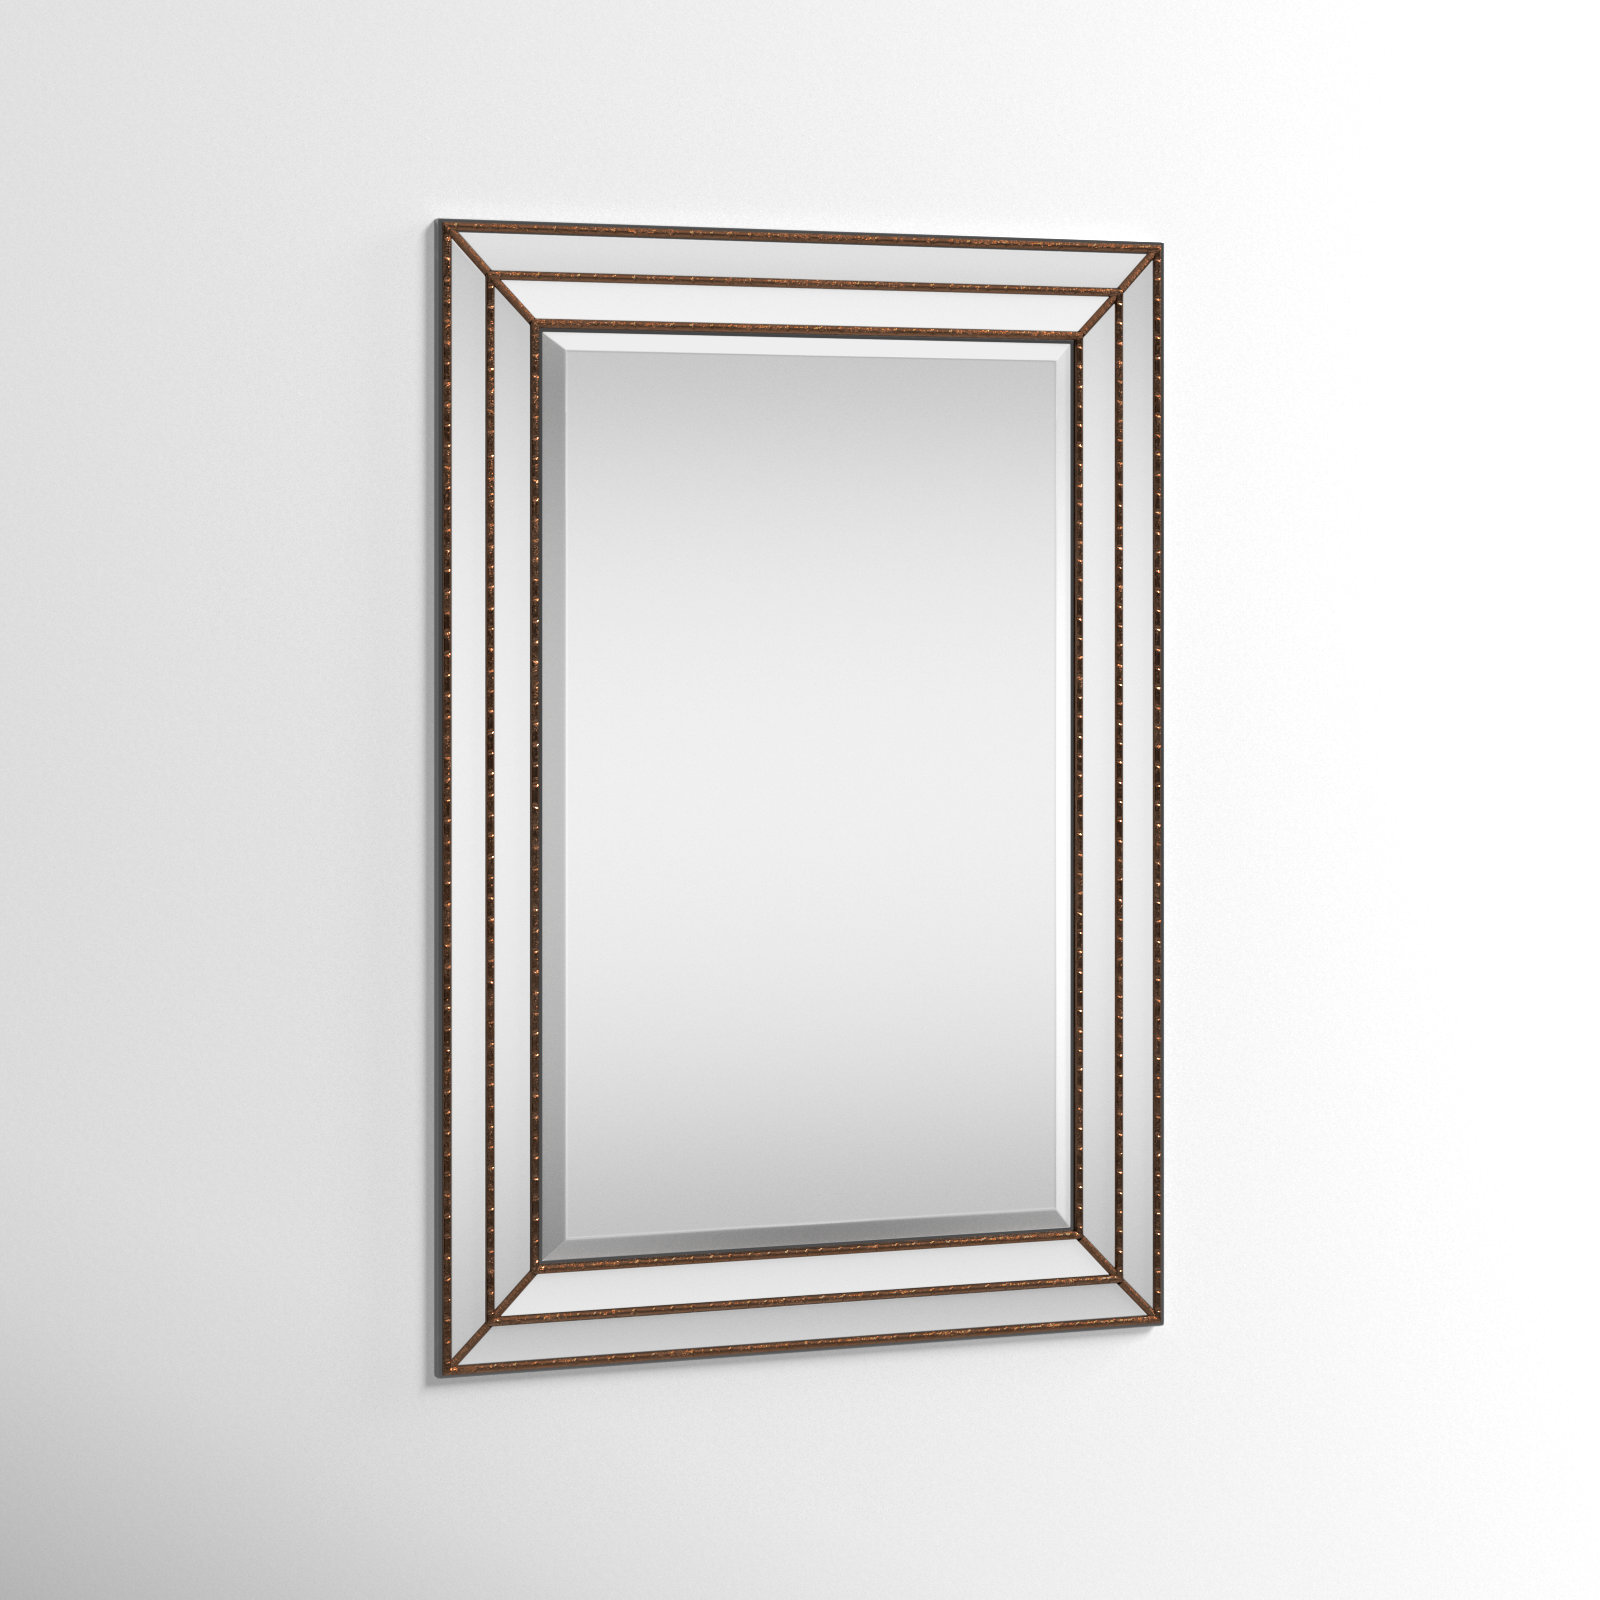 Irregular Mirror – An Immense Value Addition